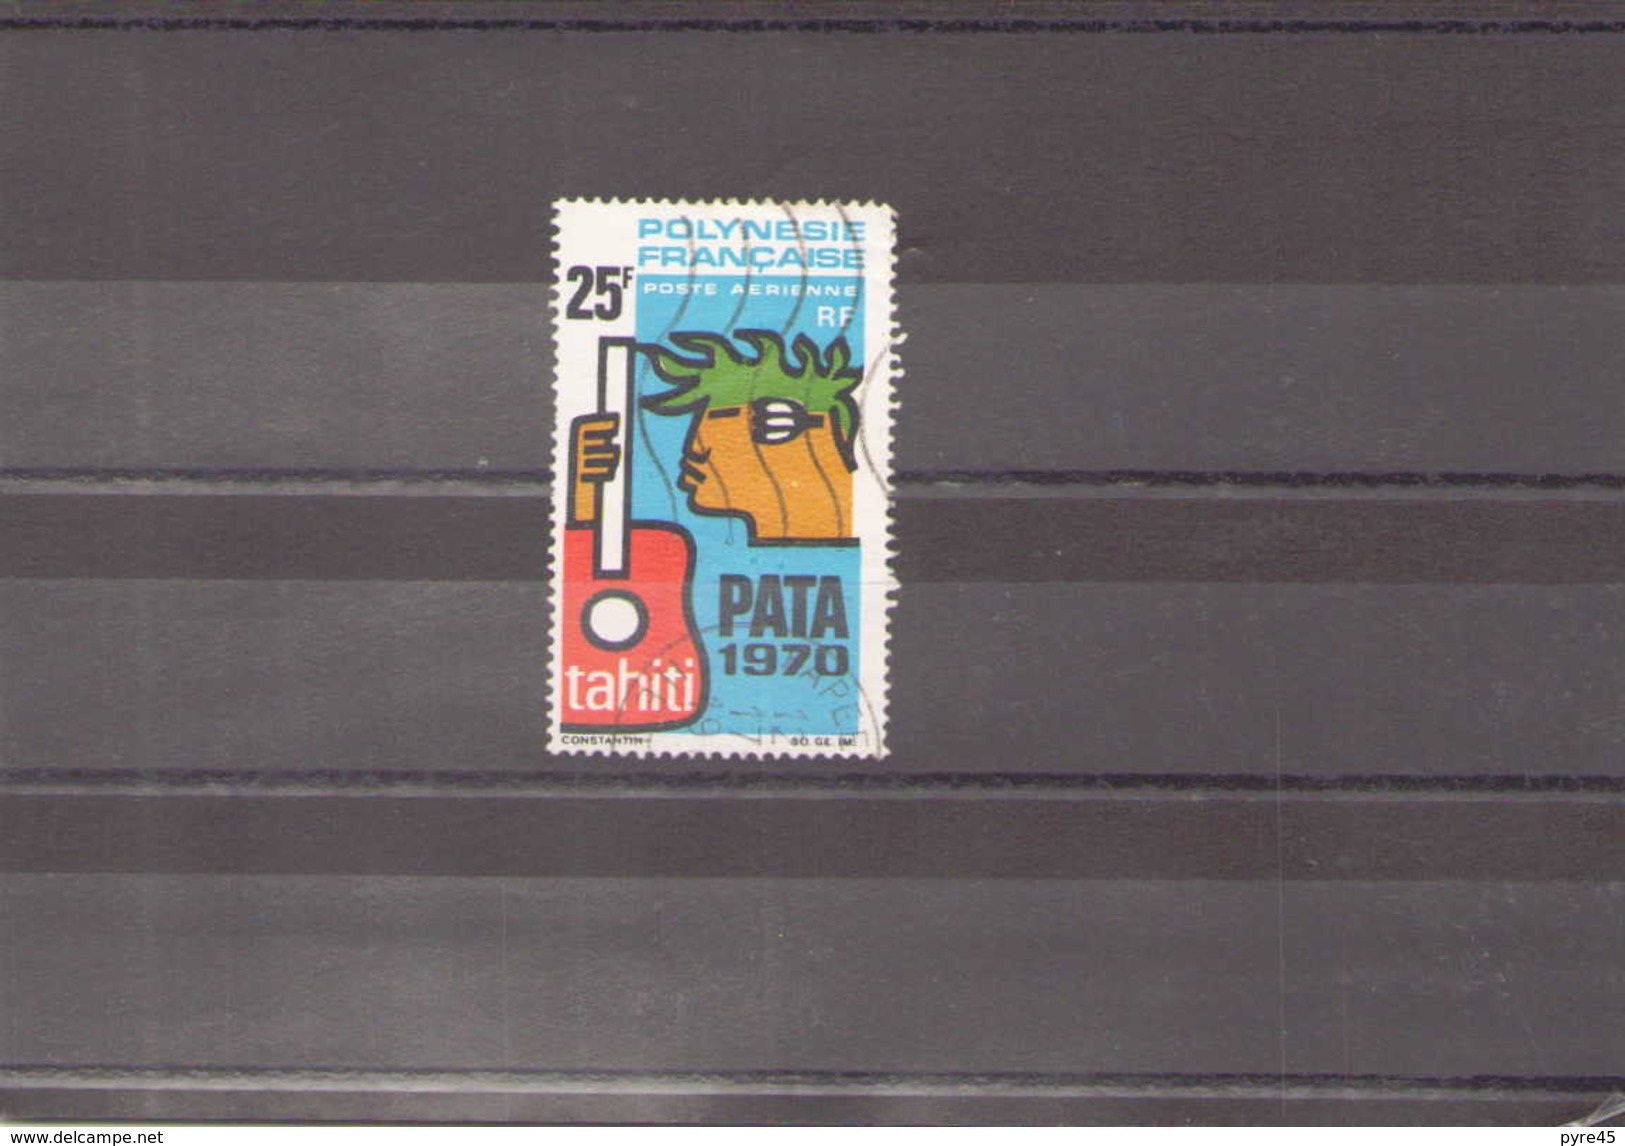 Polynesie  1969 Poste Aerienne N° 28 Oblitere - Gebruikt